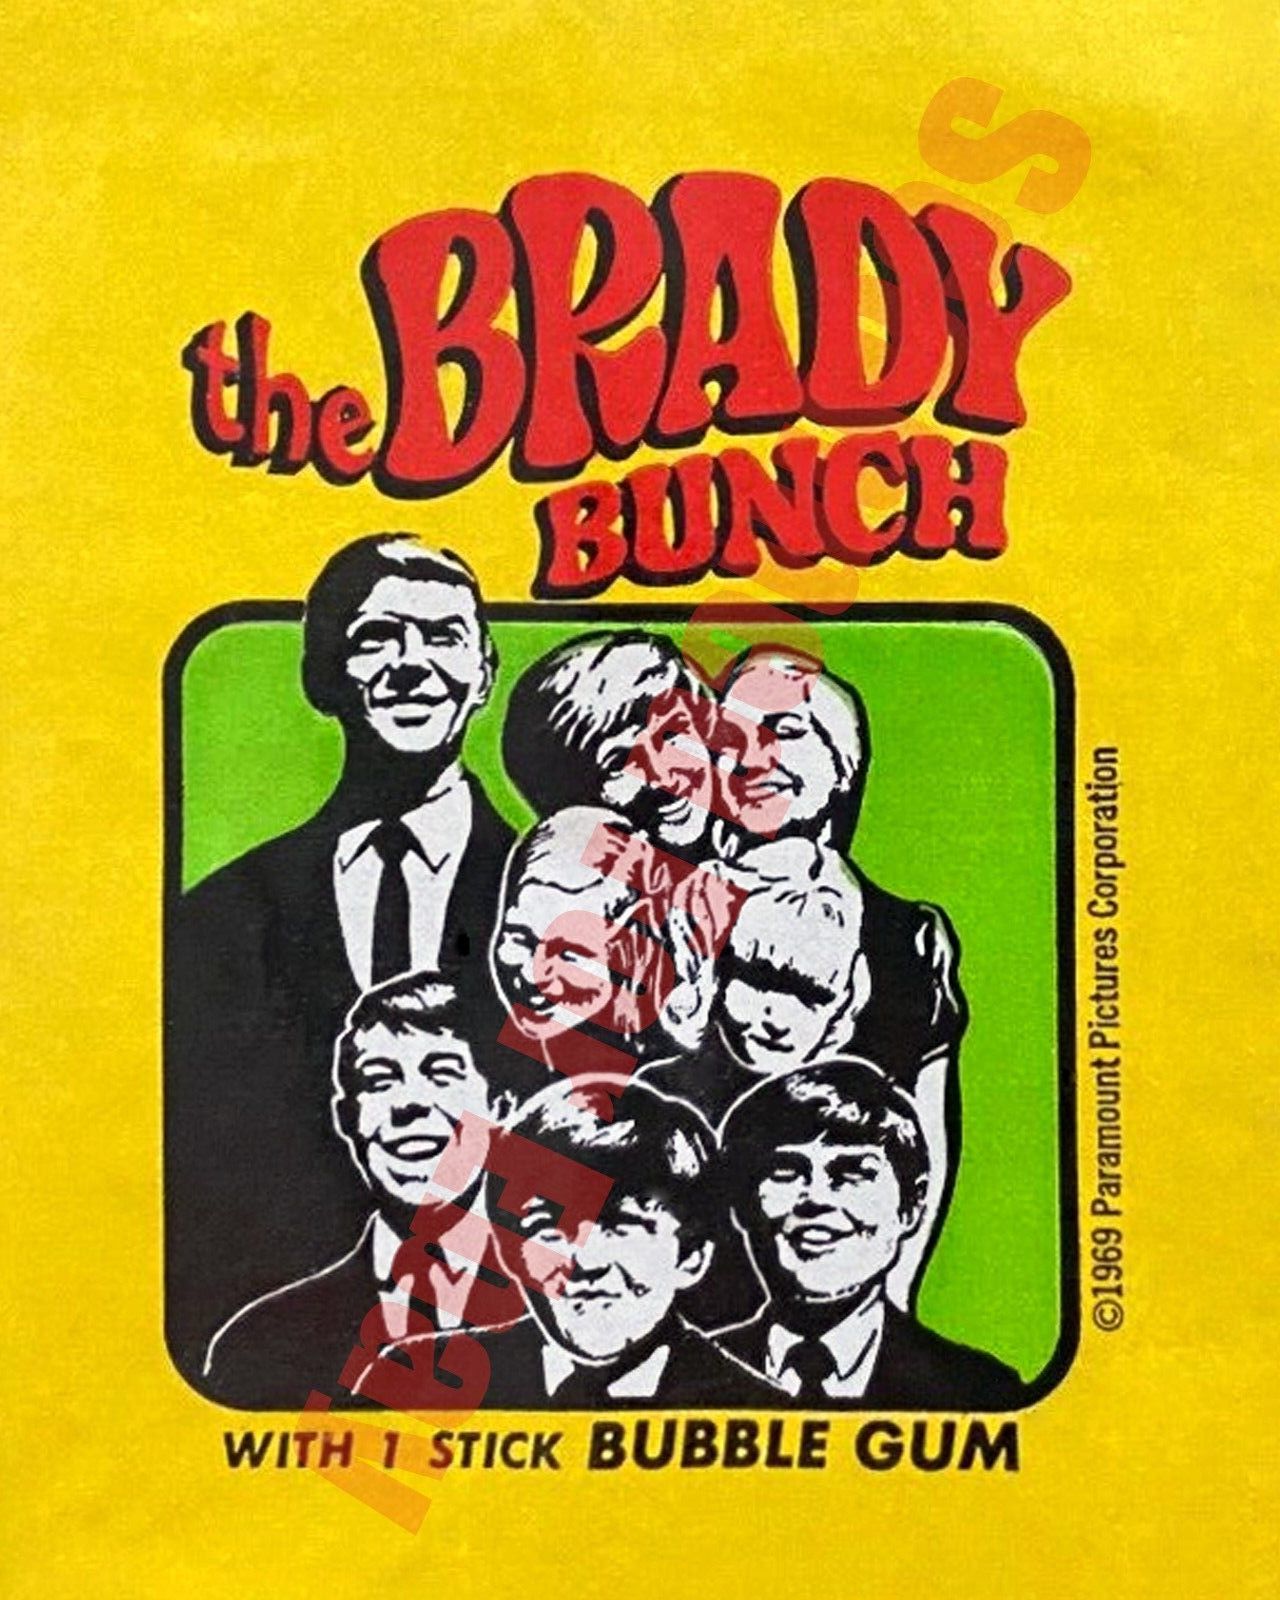 1971 TOPPS BRADY BUNCH TV Show Card Wax Pack Wrapper 8x10 Photo + FREE 1965 TOPP